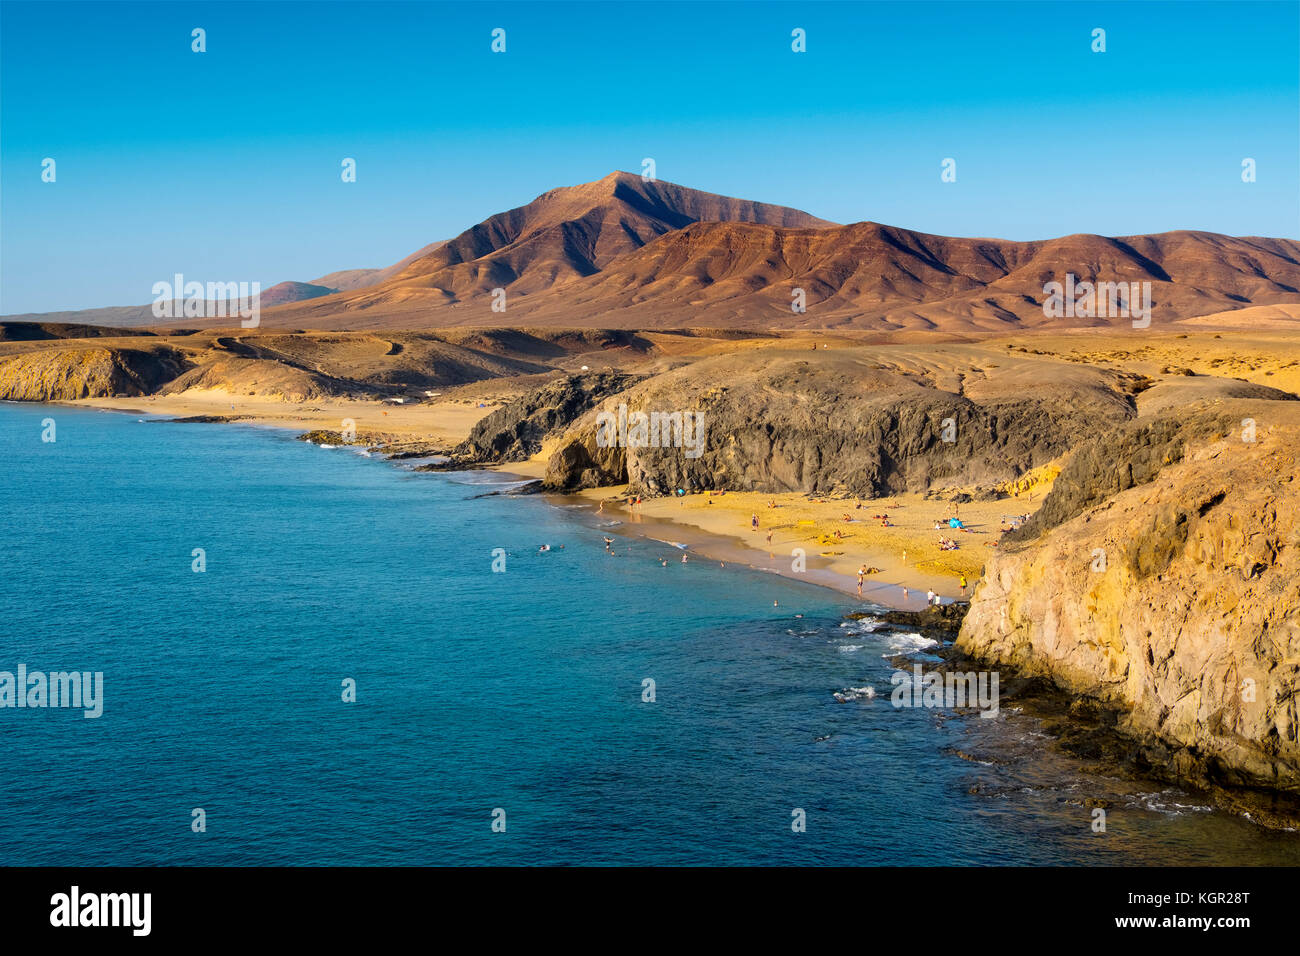 Punta de Papagayo beach, Playa Blanca. Lanzarote Island. Canary Islands Spain. Europe Stock Photo